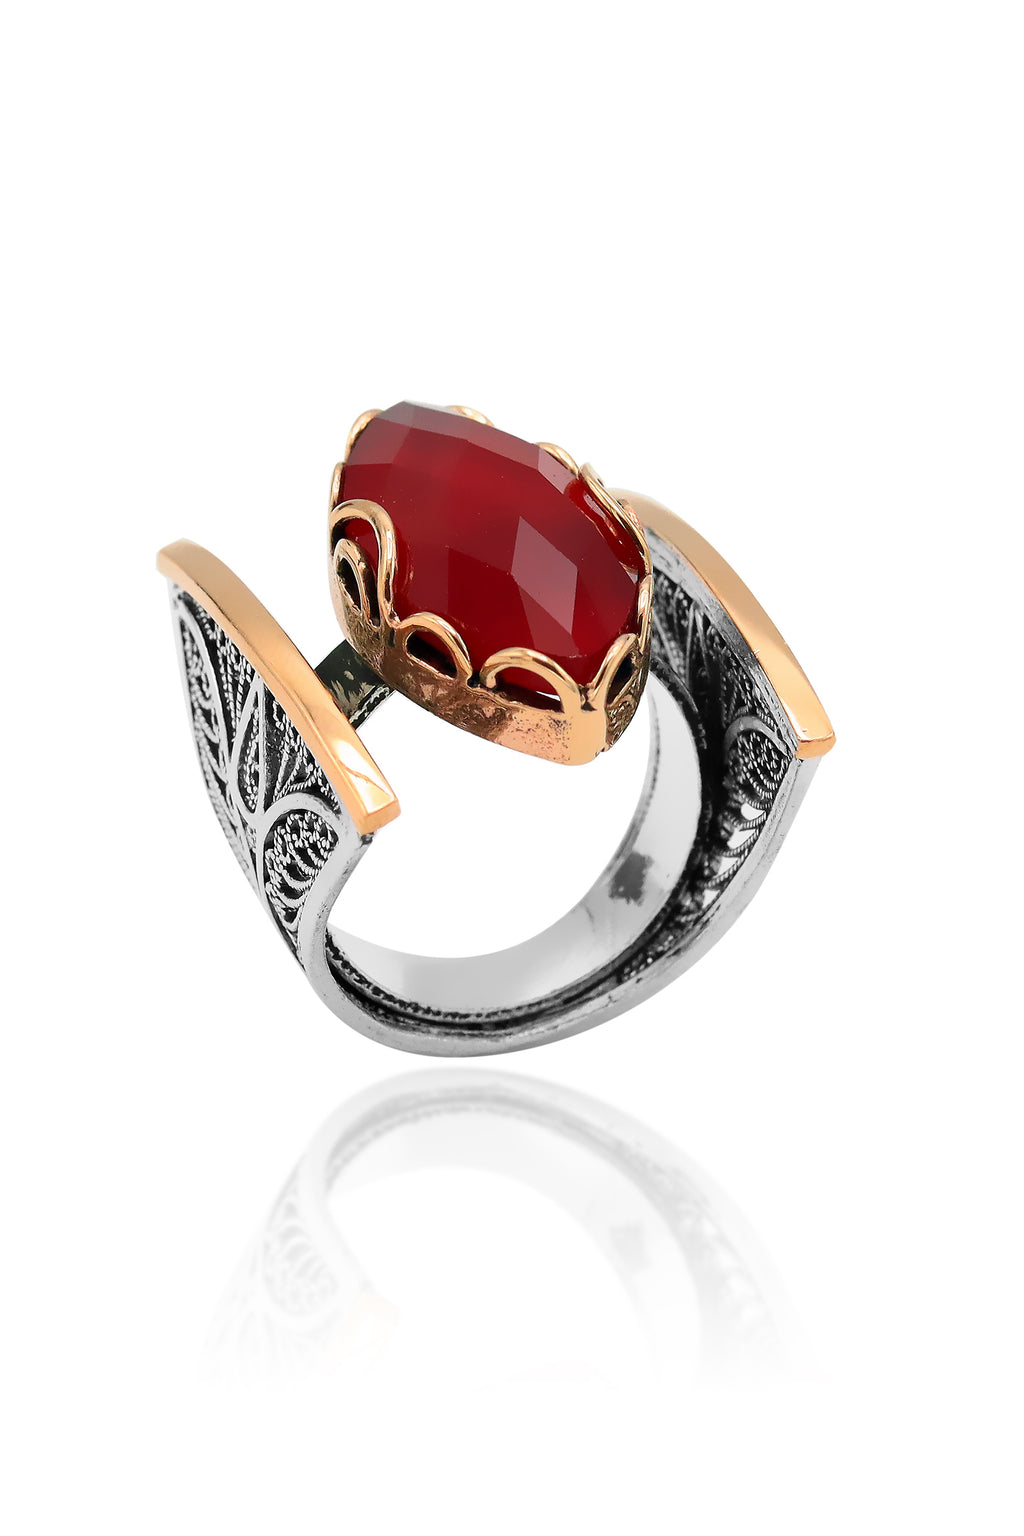 Creeper Model Filigree Silver Ring With Ruby (NG201019655)